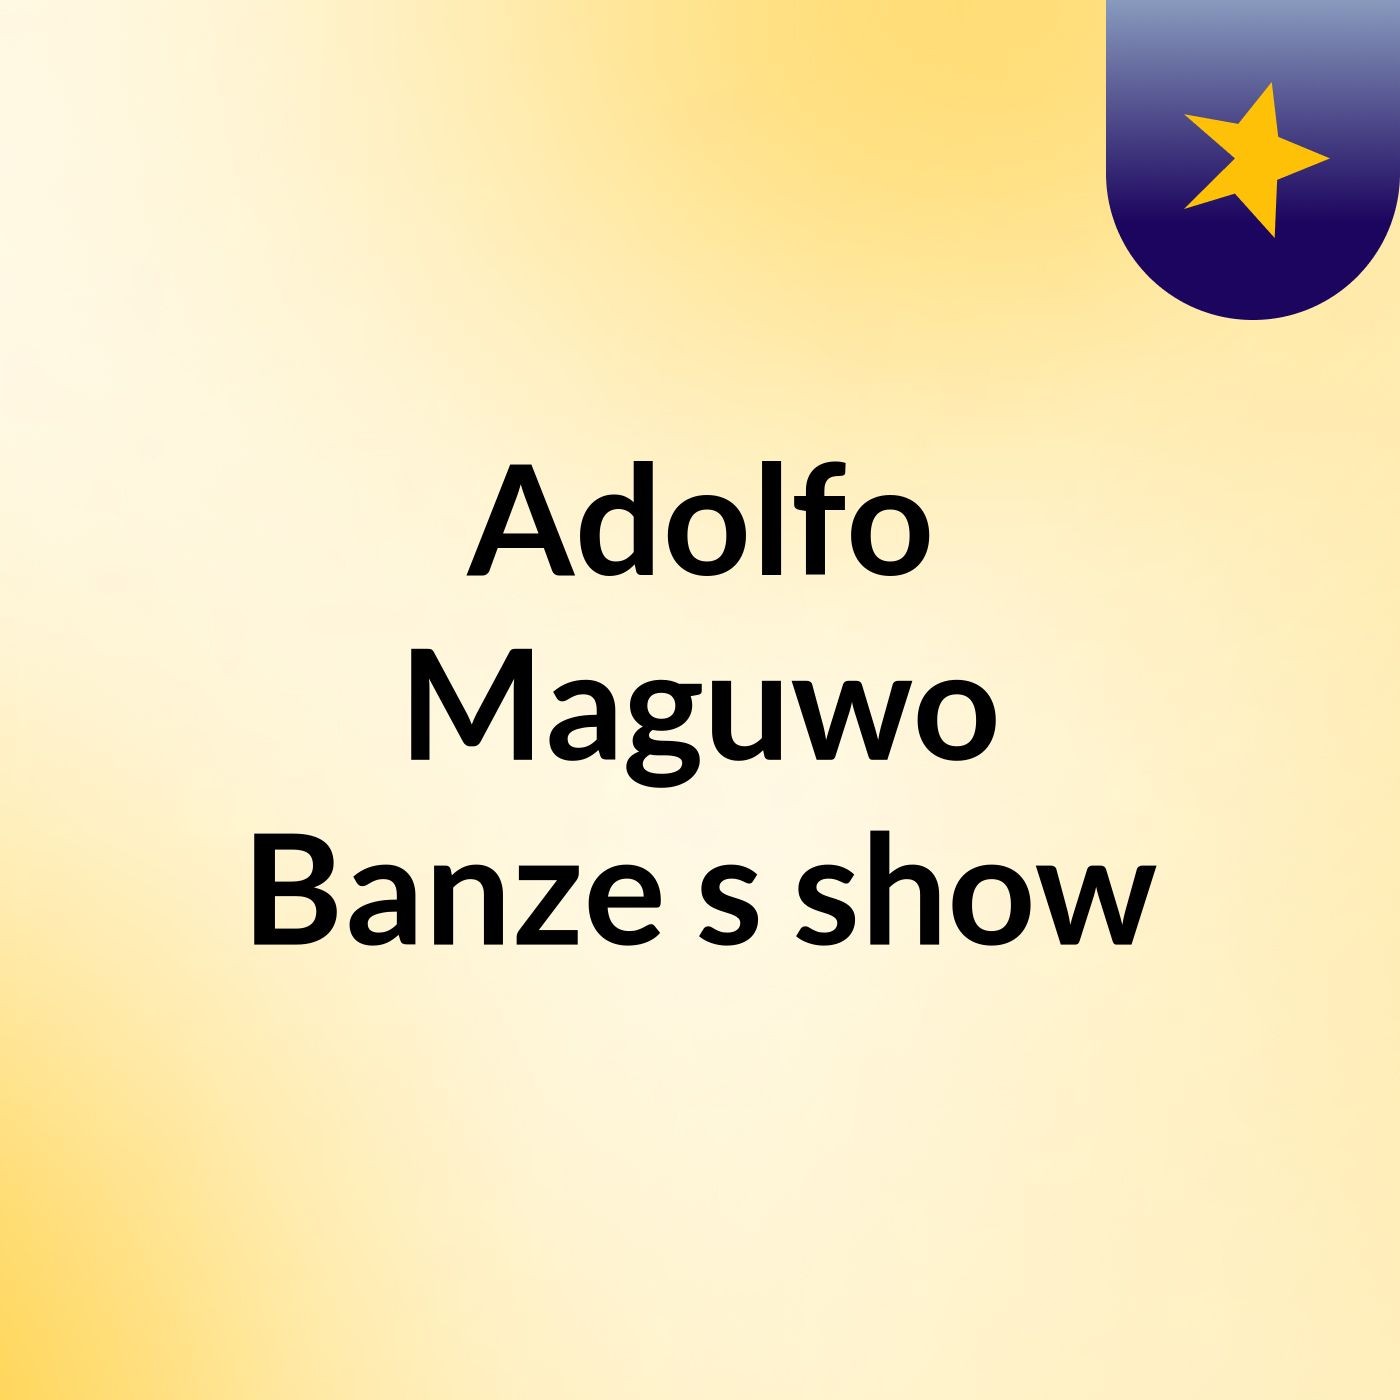 Adolfo Maguwo Banze's show